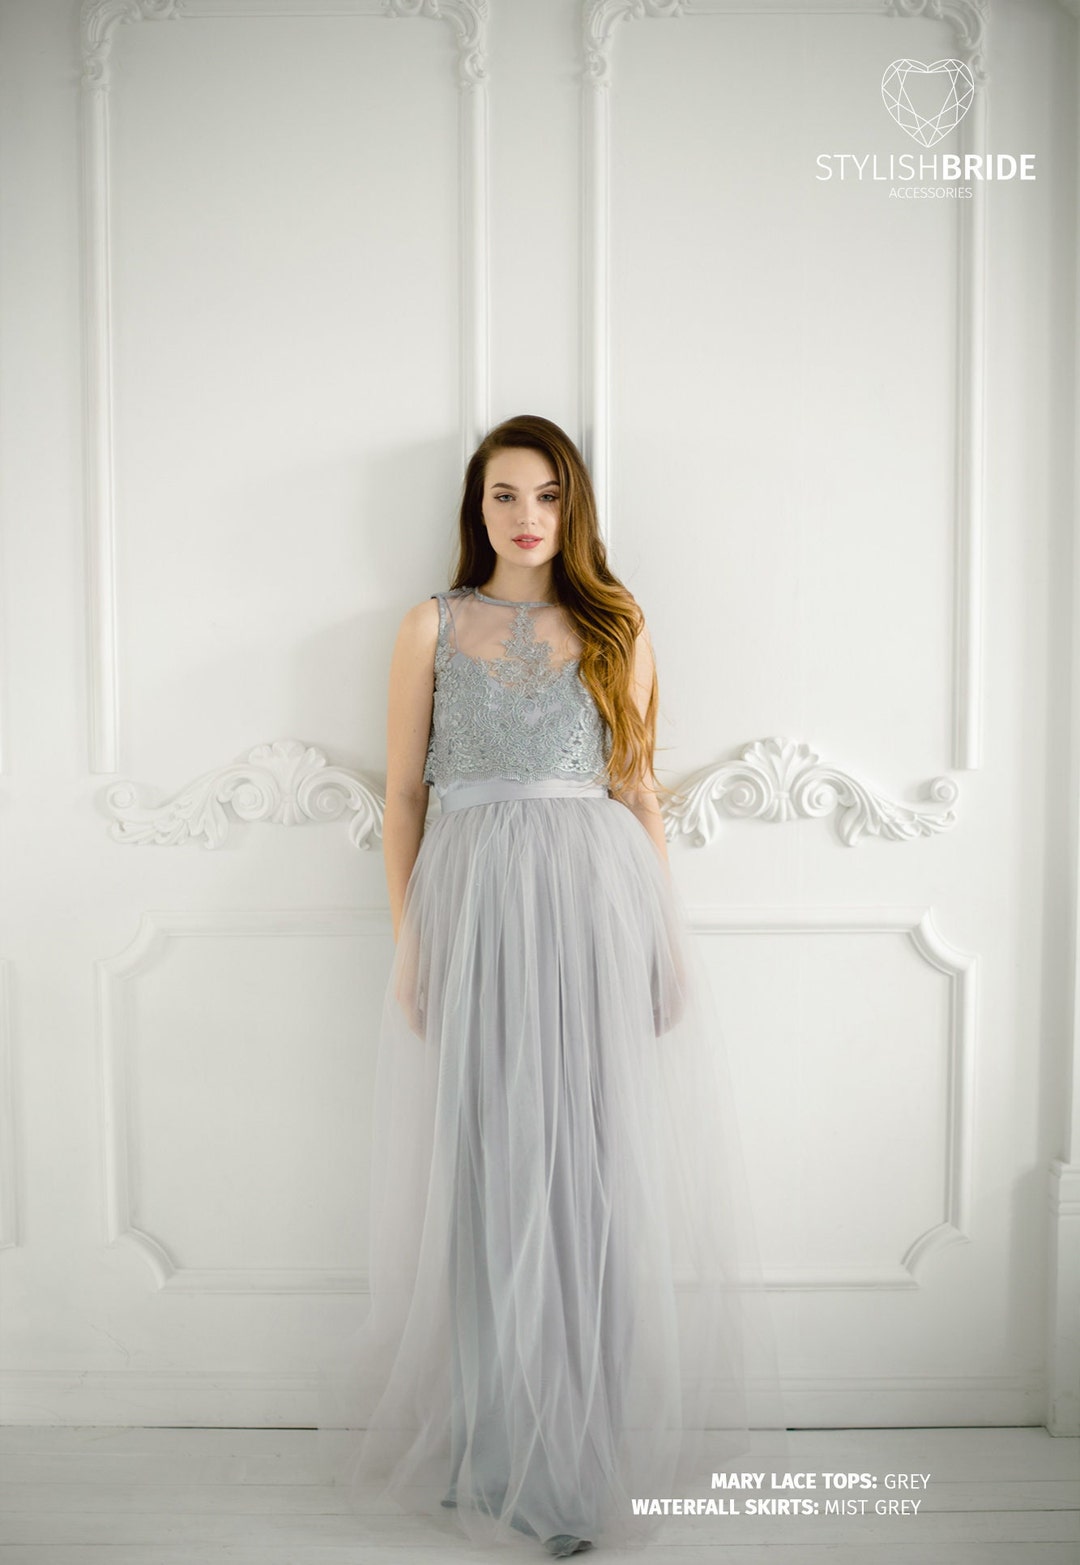 Mary Light Grey Lace Dress, Long Must Grey Waterfall Bridesmaids